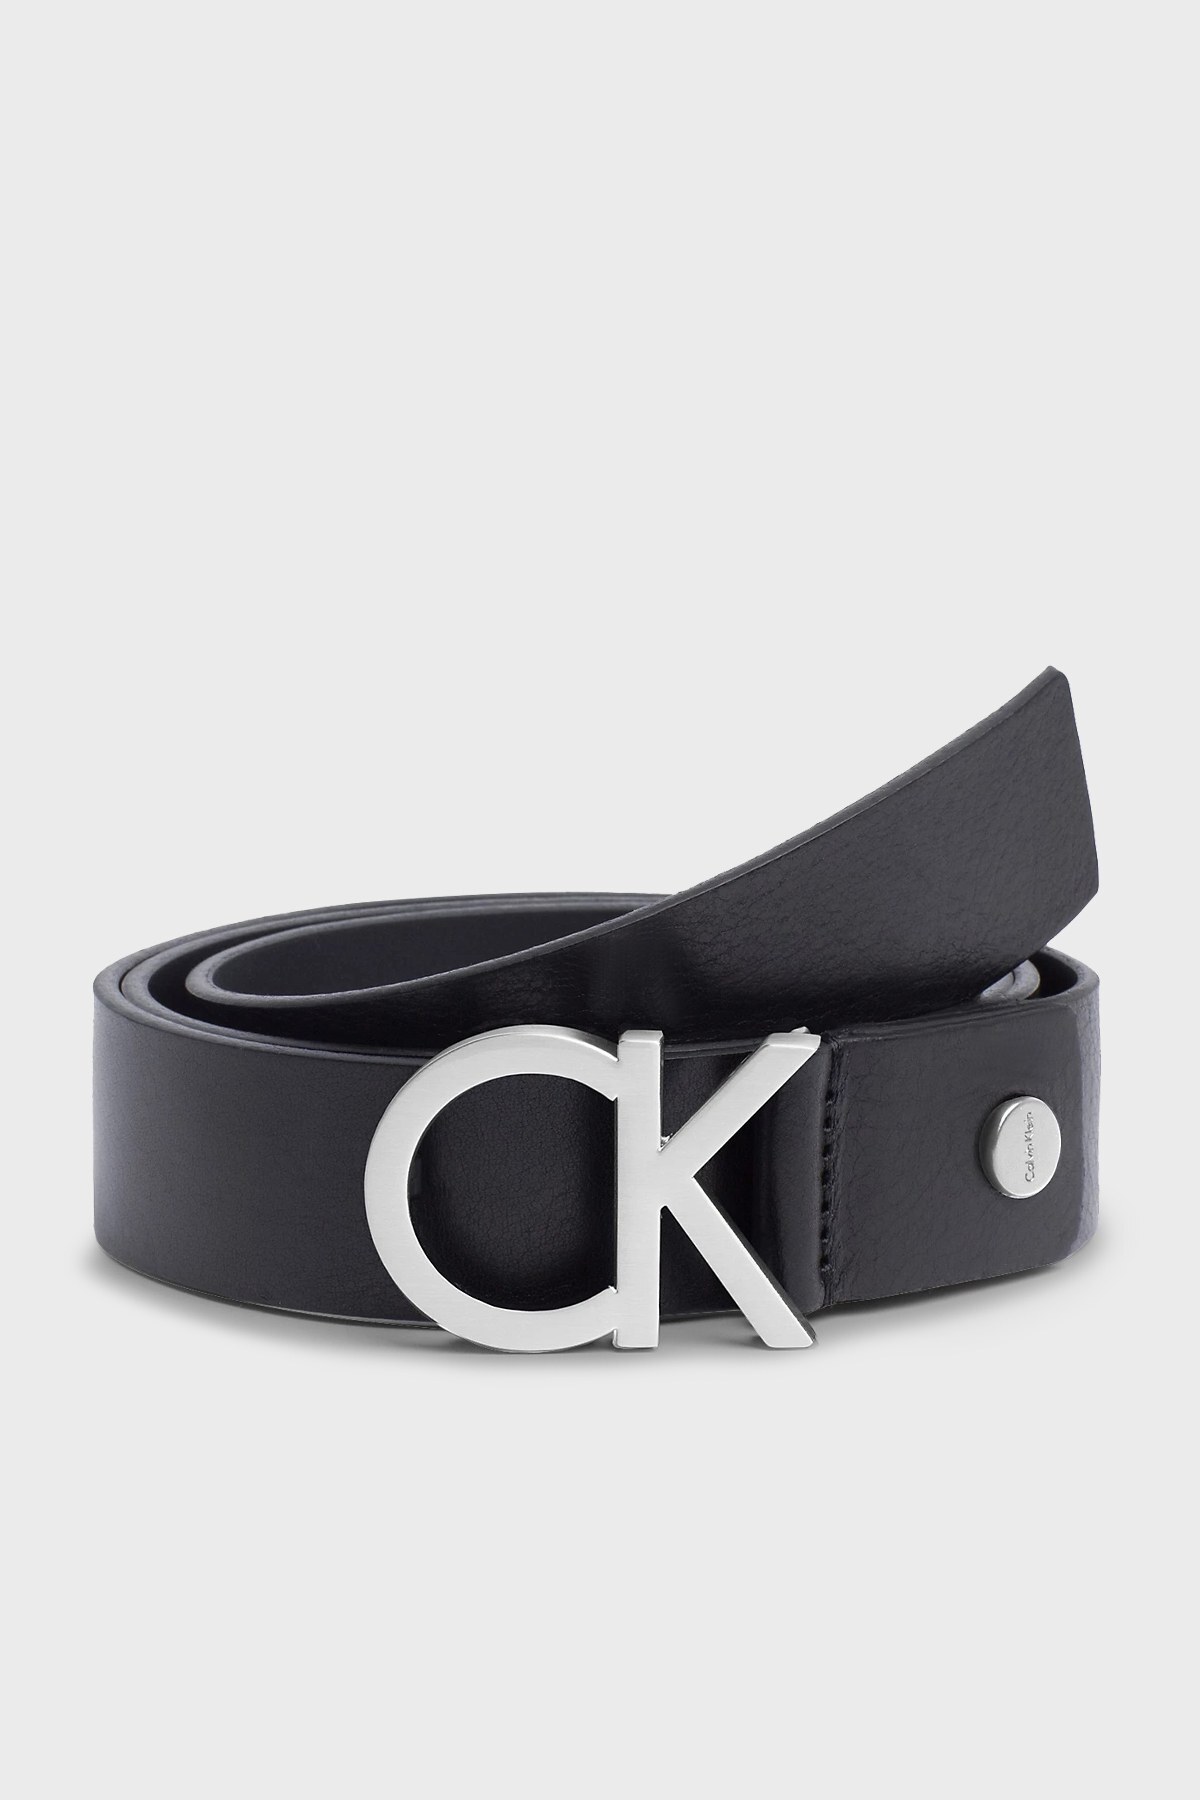 Calvin Klein Marka Logolu Hakiki Deri Erkek Kemer K50K502119 001 SİYAH